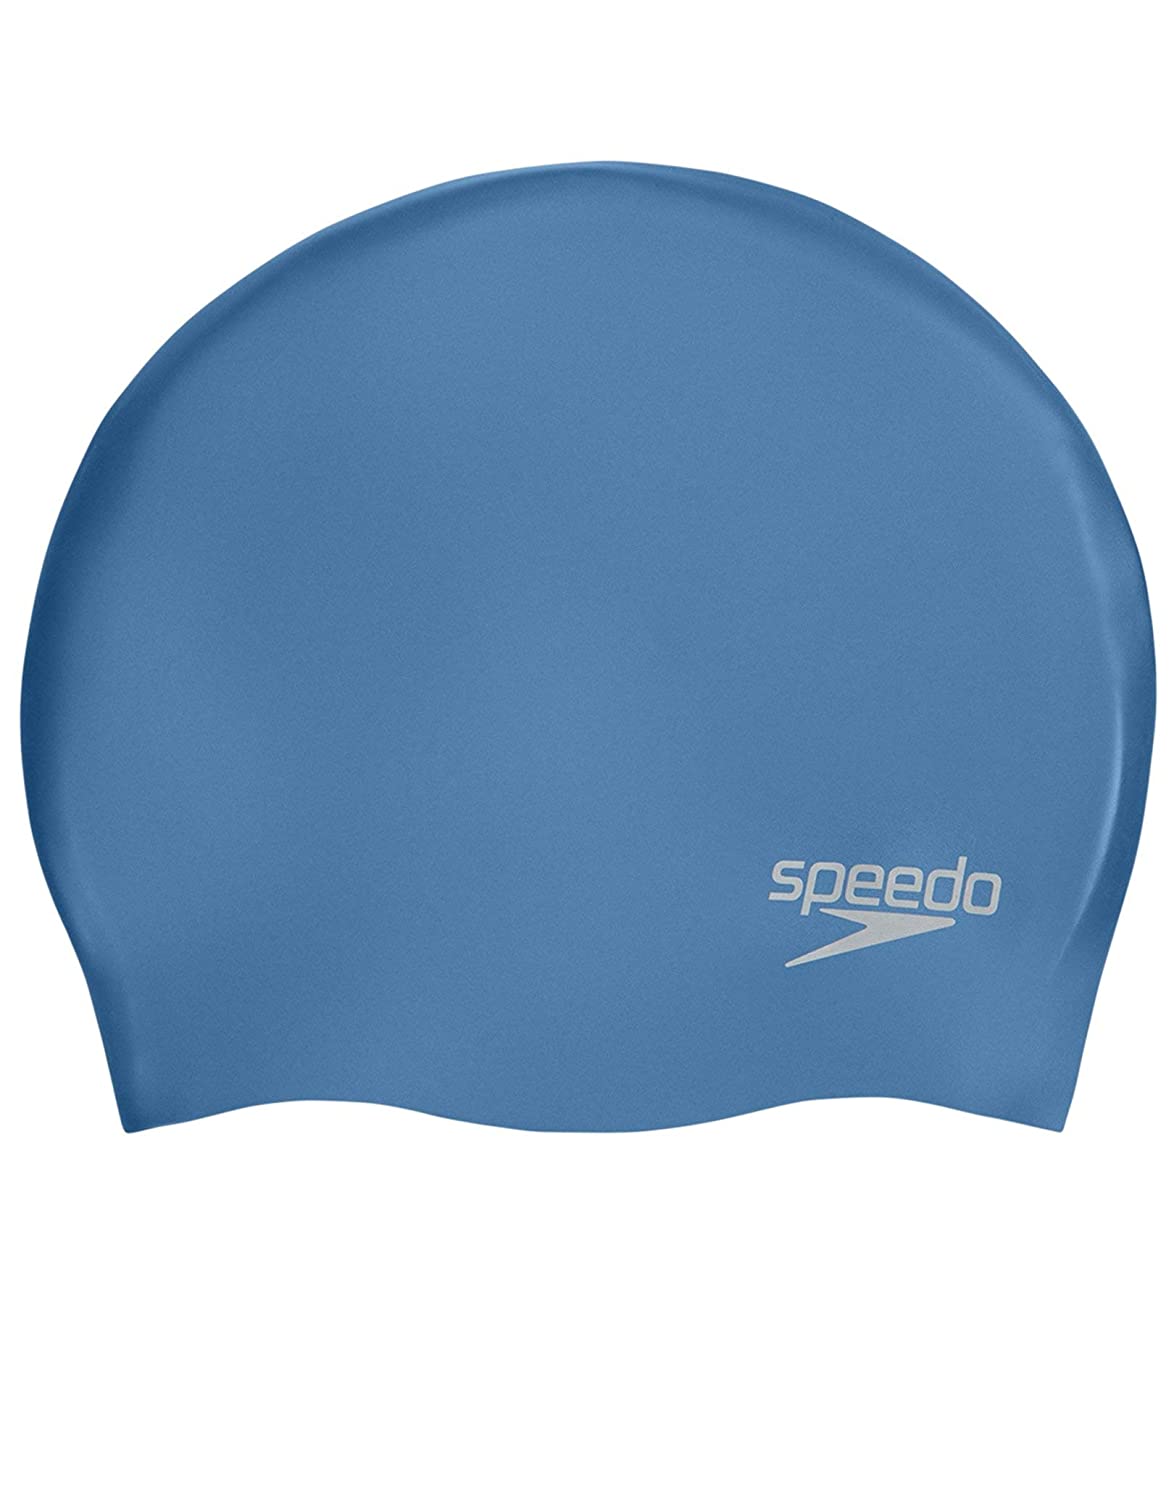 Speedo Molded Silicone Cap For Unisex-Adult (Size: 1Sz,Color: Blue/Silver) - Best Price online Prokicksports.com